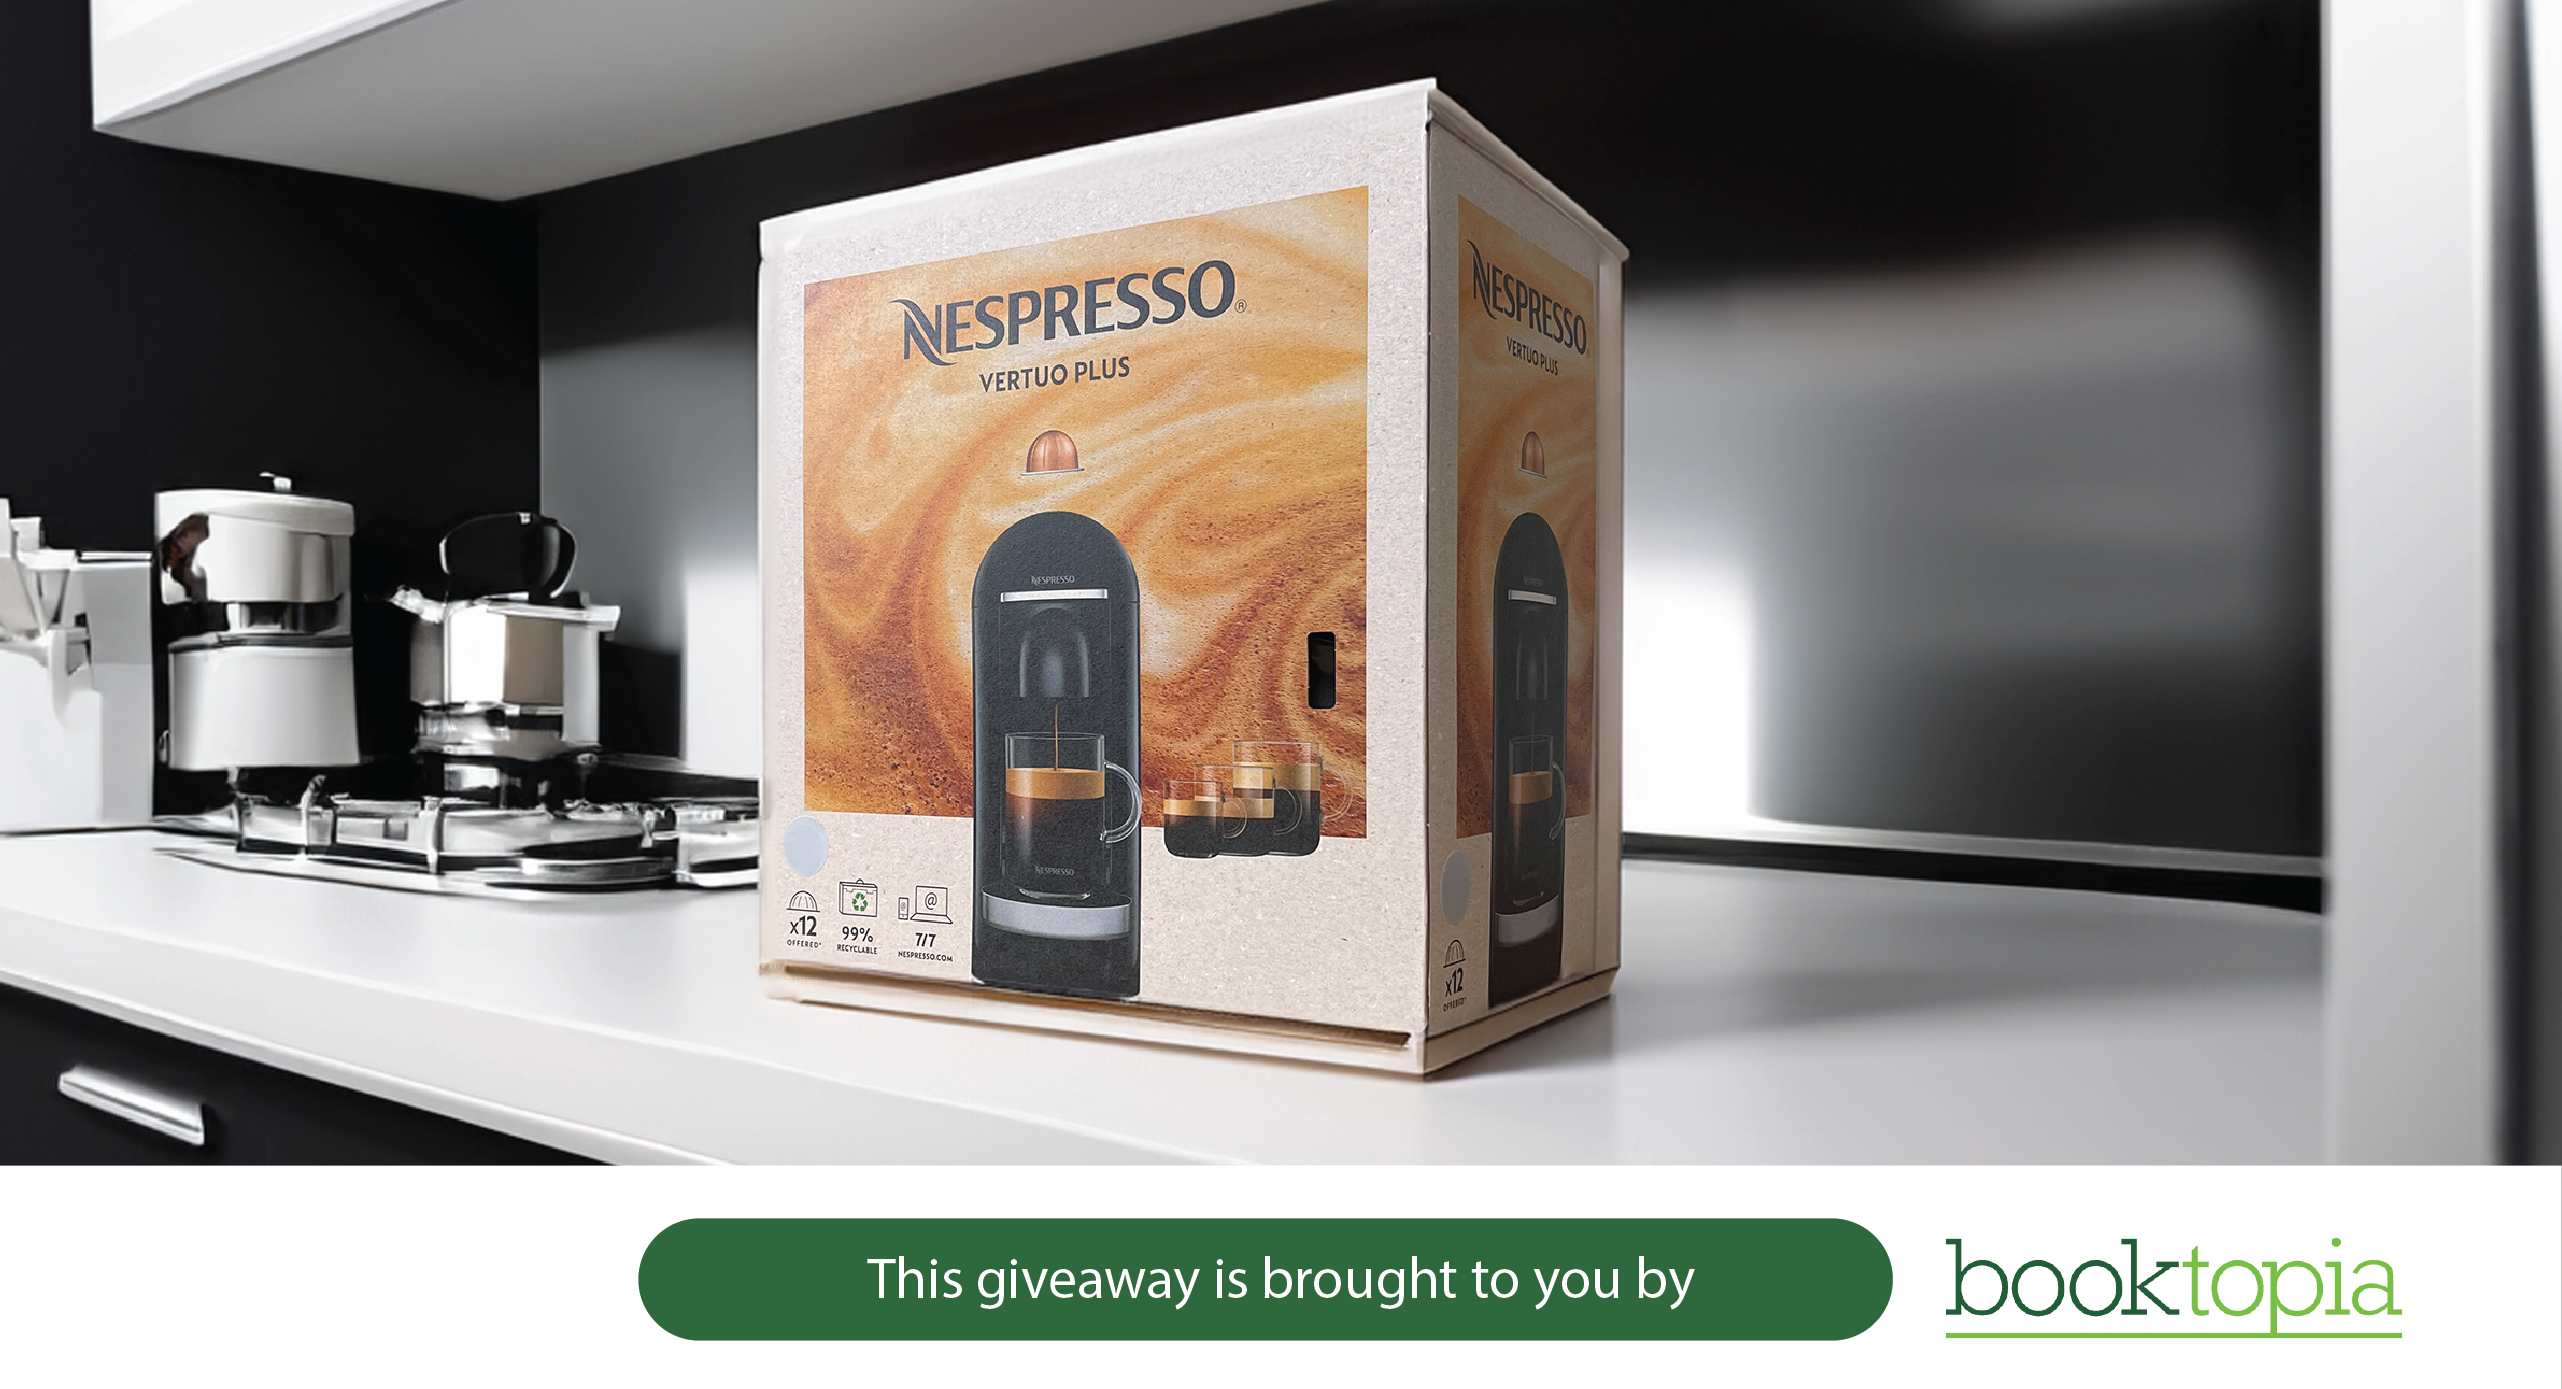 Nespresso Vertuo Plus CARMA Rewards Club giveaway bench top in kitchen